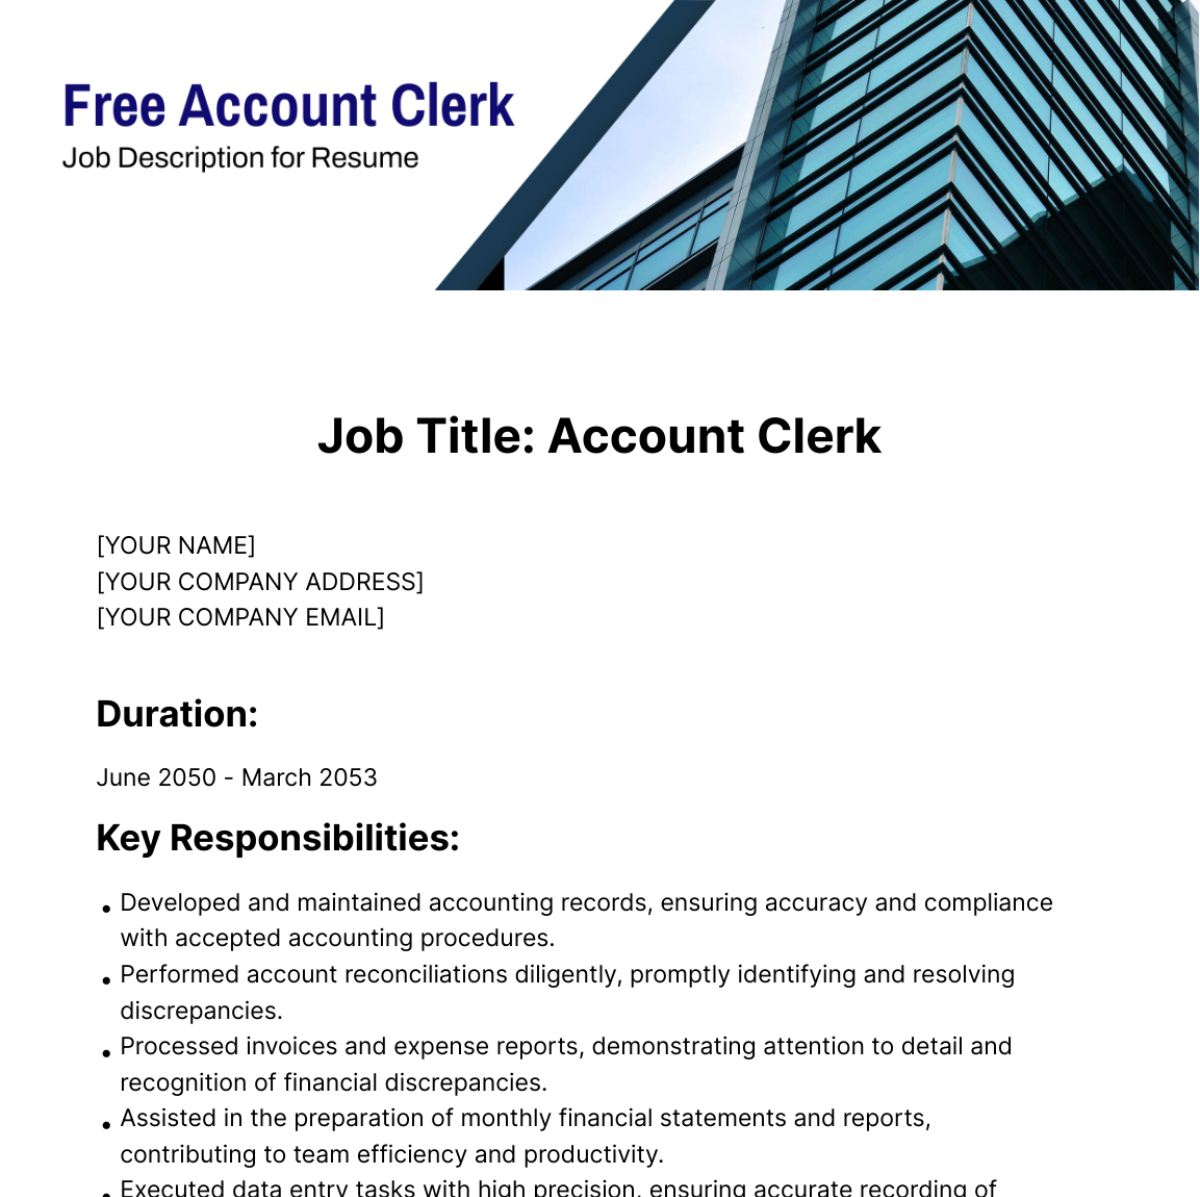 Free Account Clerk Job Description for Resume Template